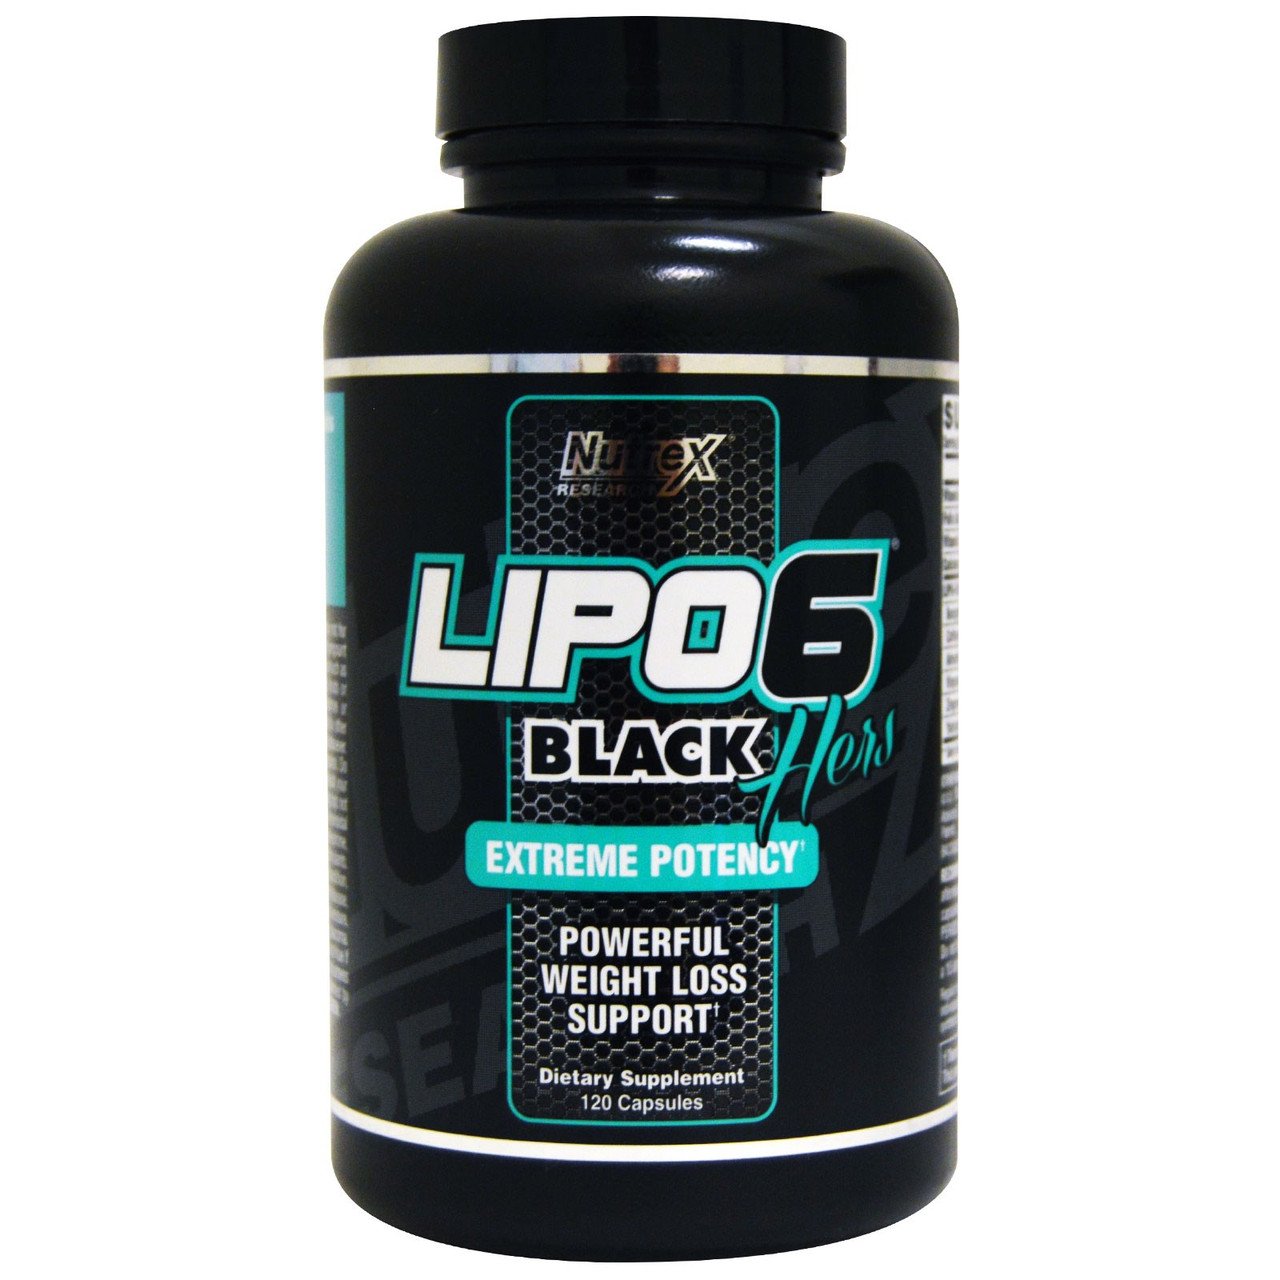 Lipo-6 Black Hers Extreme Potency Nutrex 120 Caps,  мл, Nutrex Research. Жиросжигатель. Снижение веса Сжигание жира 